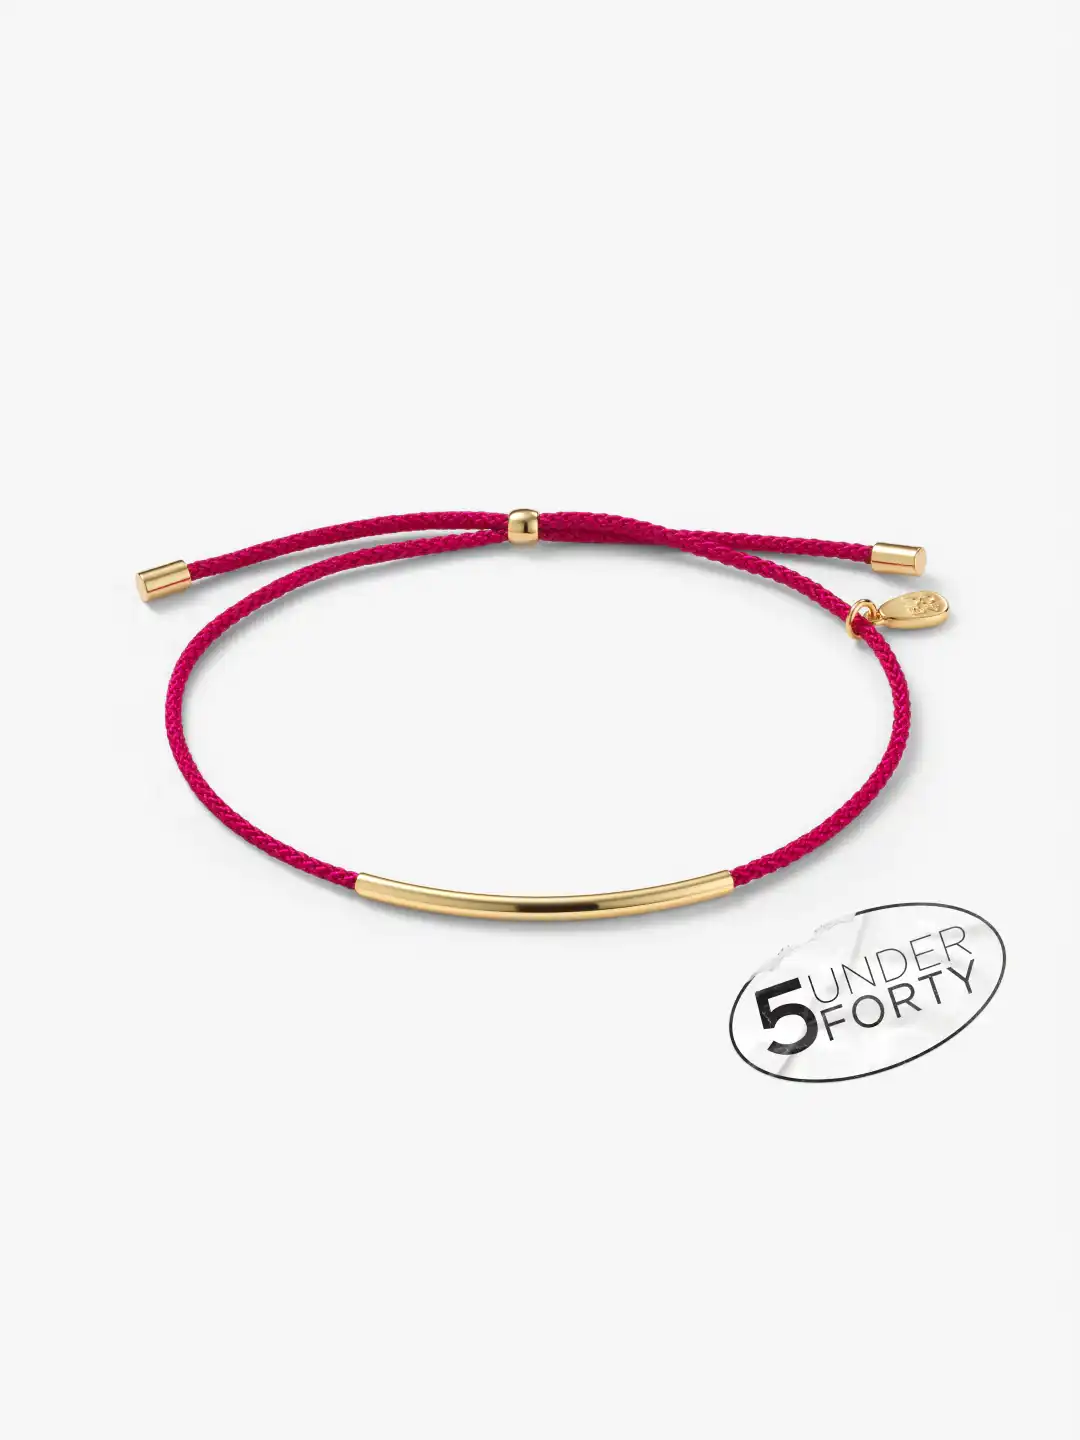 Ana-Luisa-Jewelry-Bracelets-Cord-Bracelet-Breast-Cancer-Support-Bracelet-Gold_2